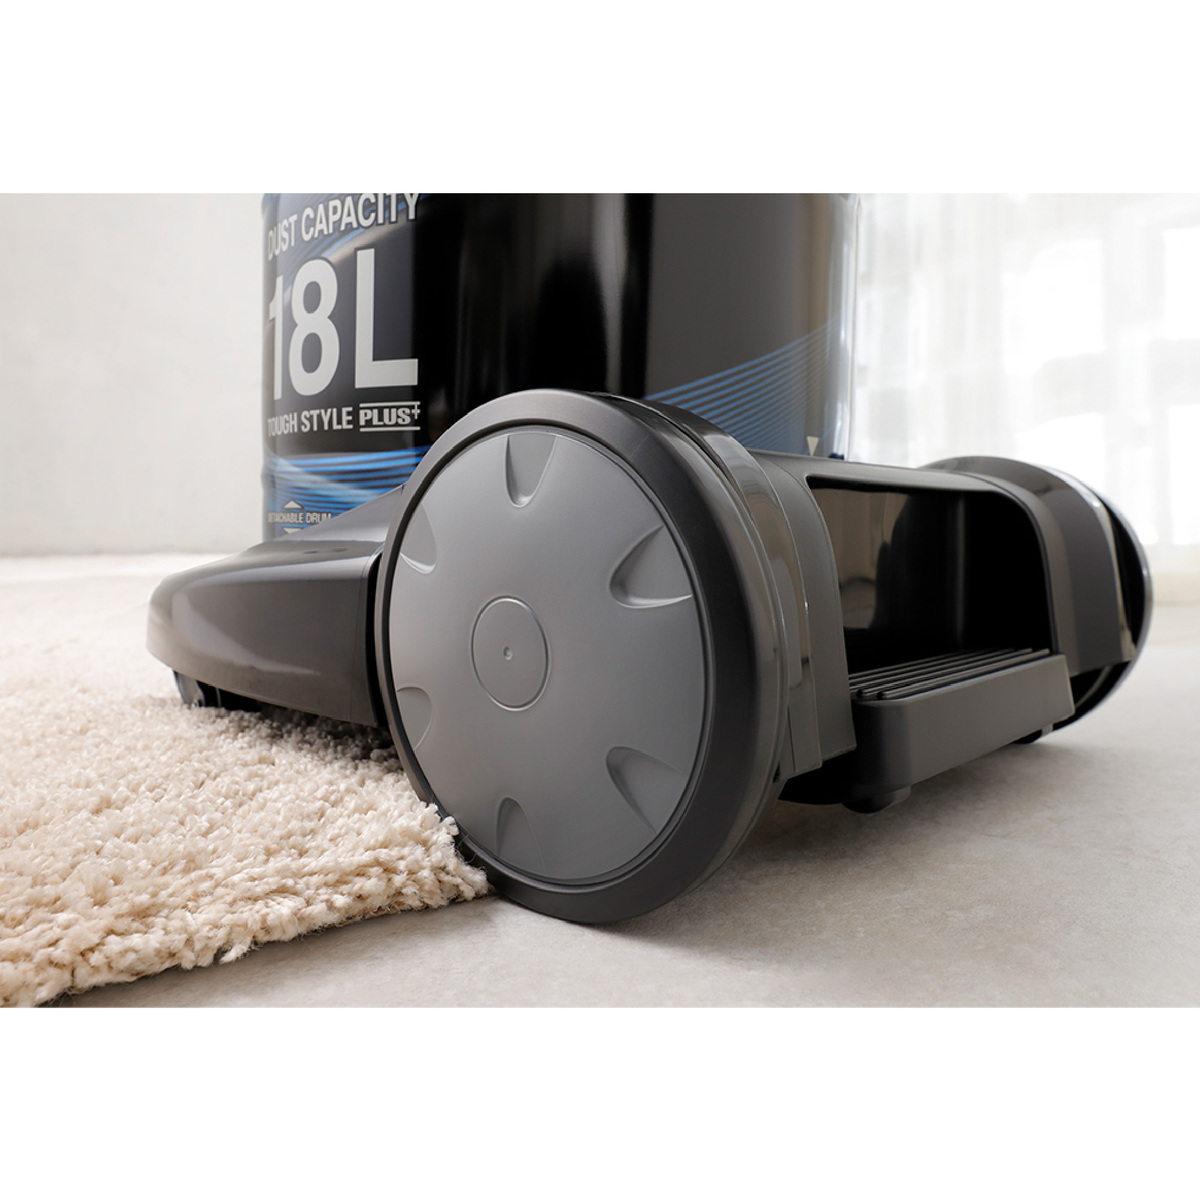 Panasonic Drum Vacuum Cleaner MC-YL778A 2100W